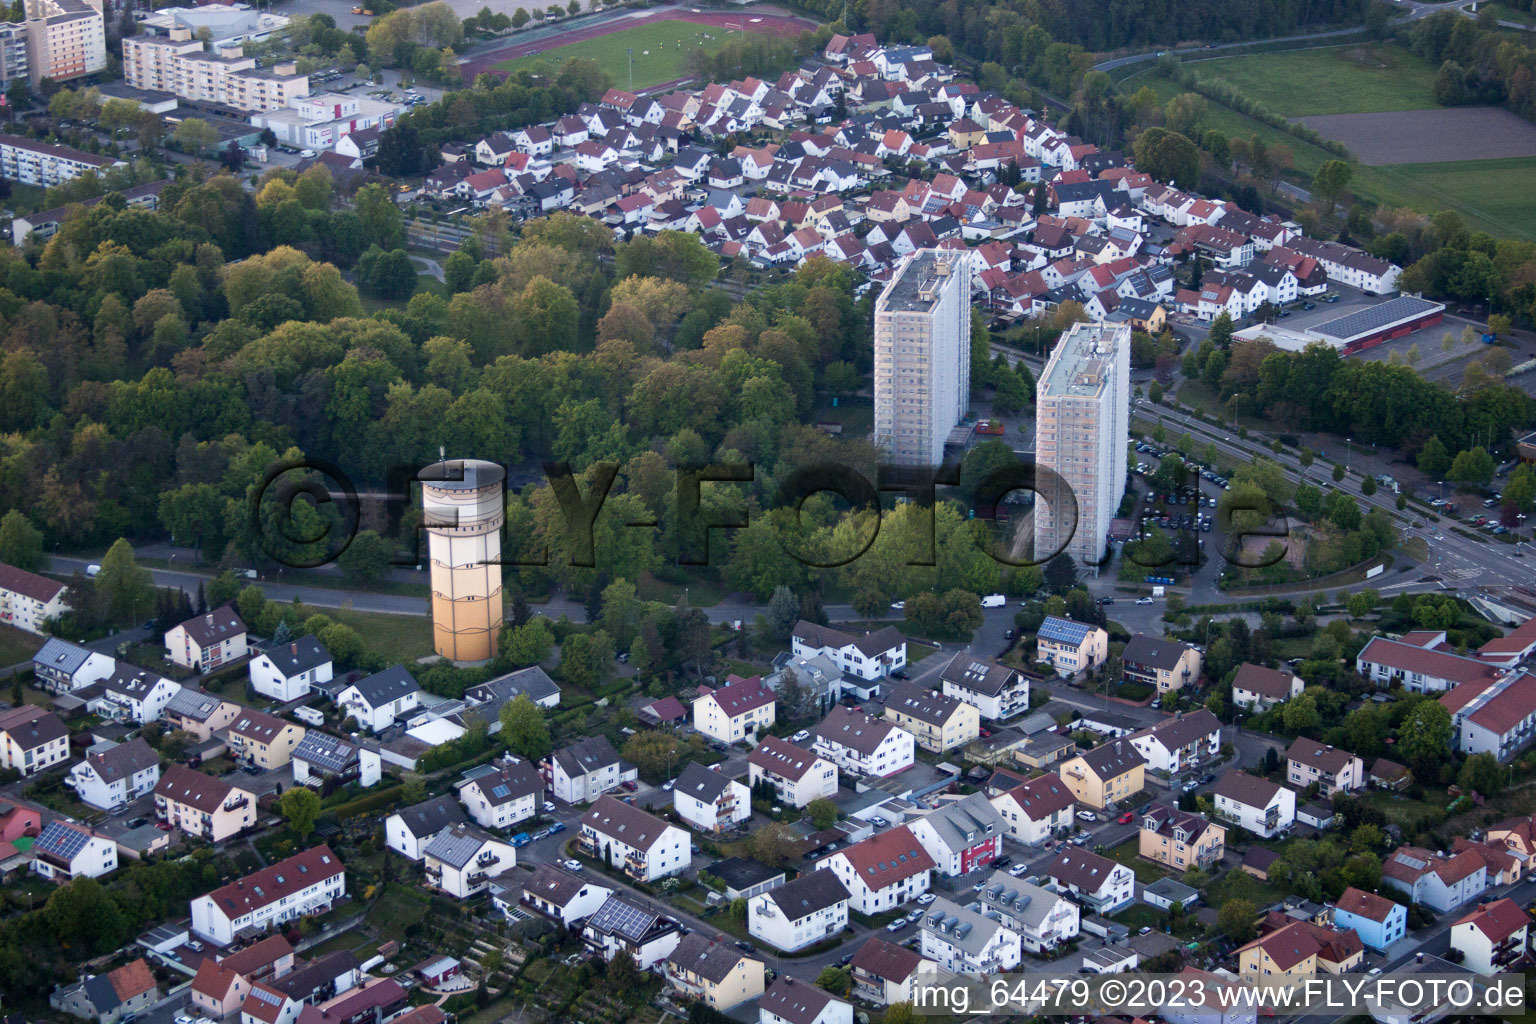 Aerial view of Wörth am Rhein in the state Rhineland-Palatinate, Germany